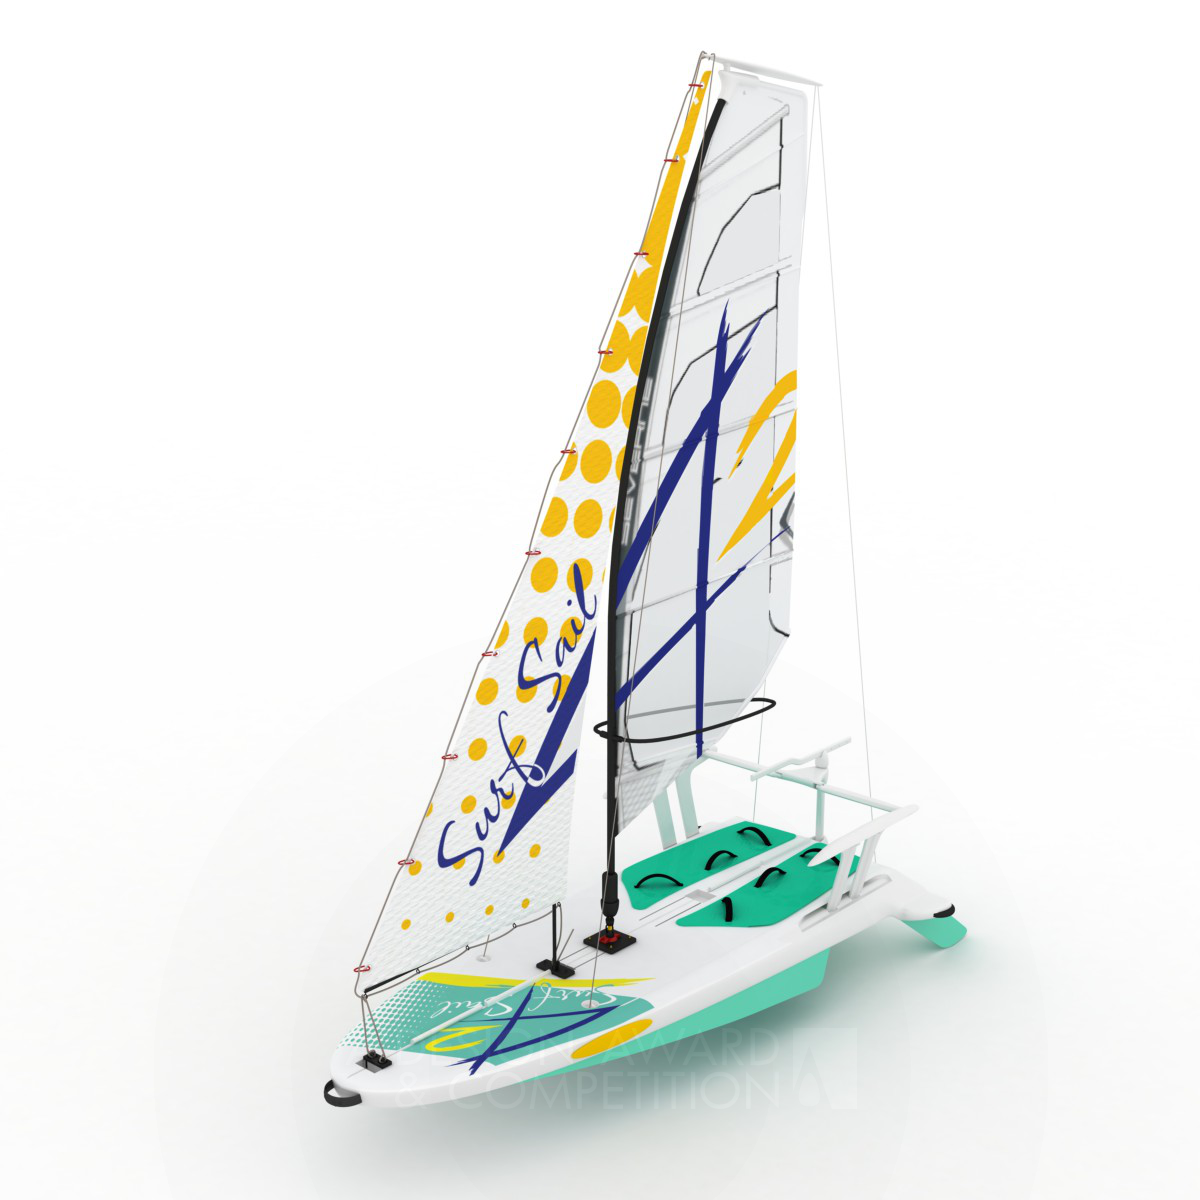 Good Sailboard for windsurfing and sailing Design